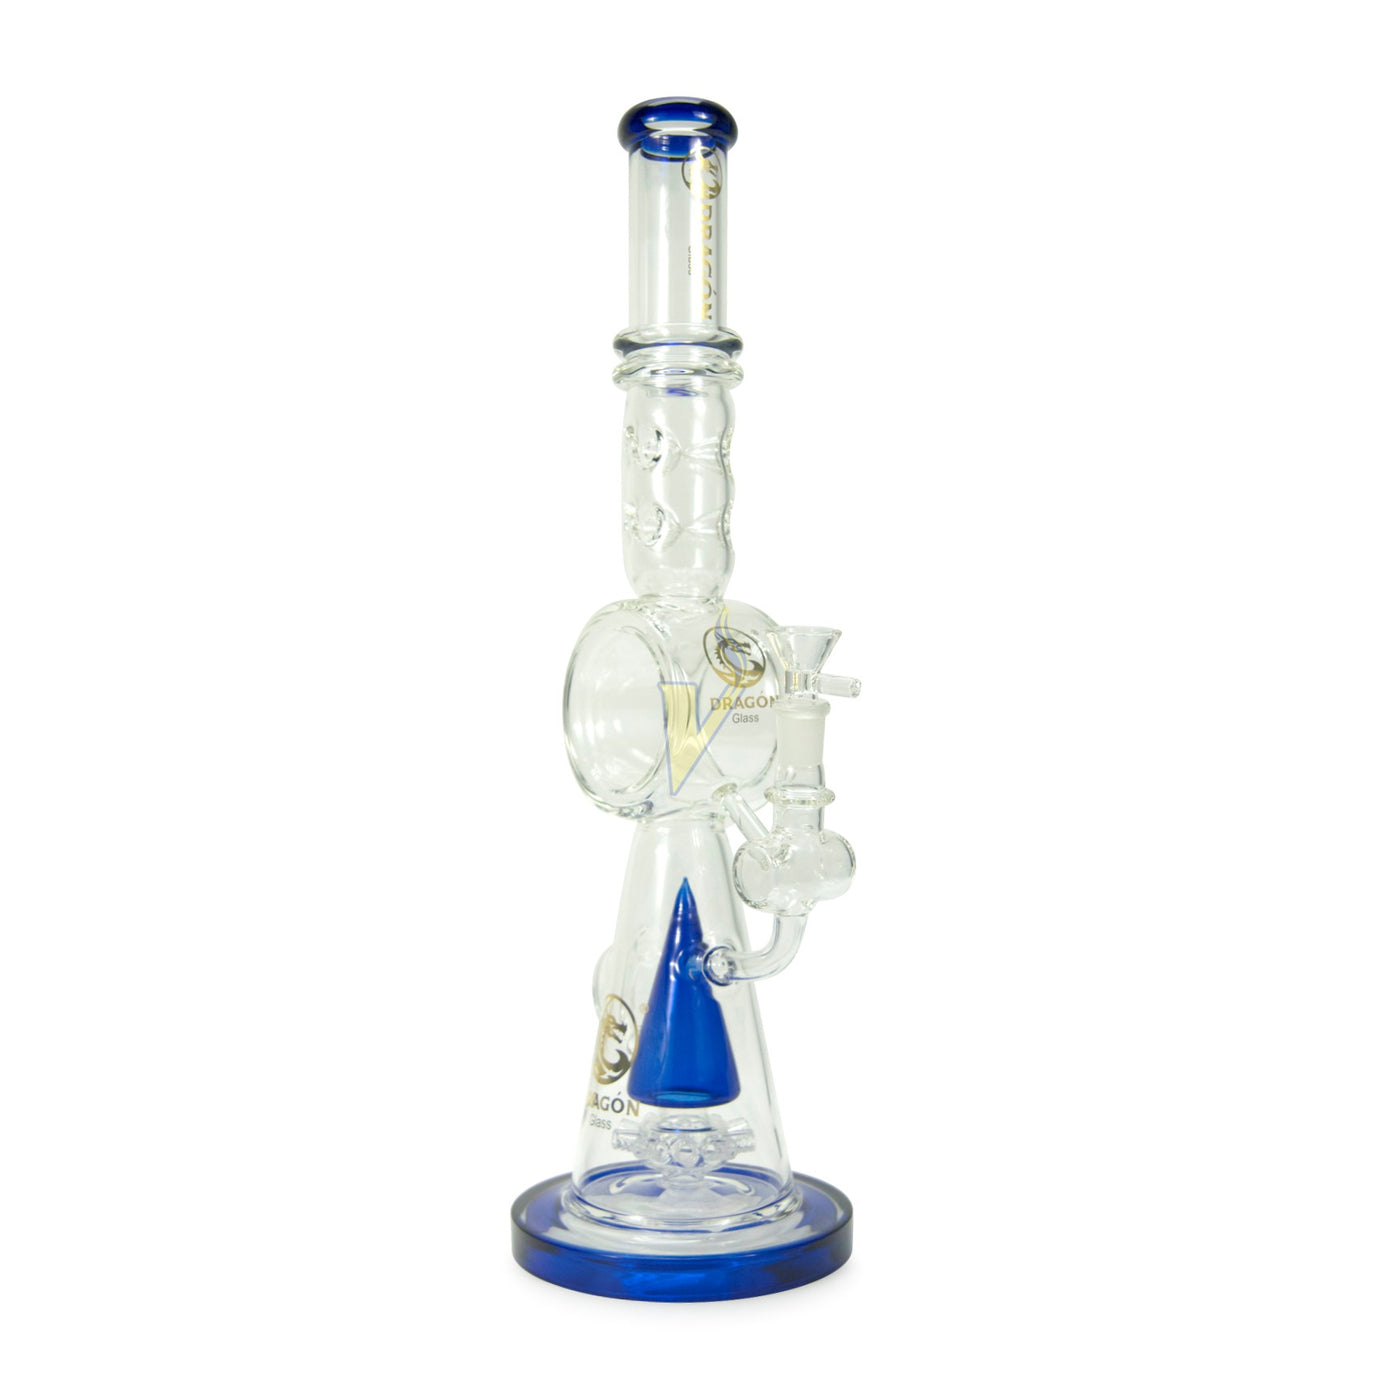 Dragon Glass Beaker 17 inch Water Pipe